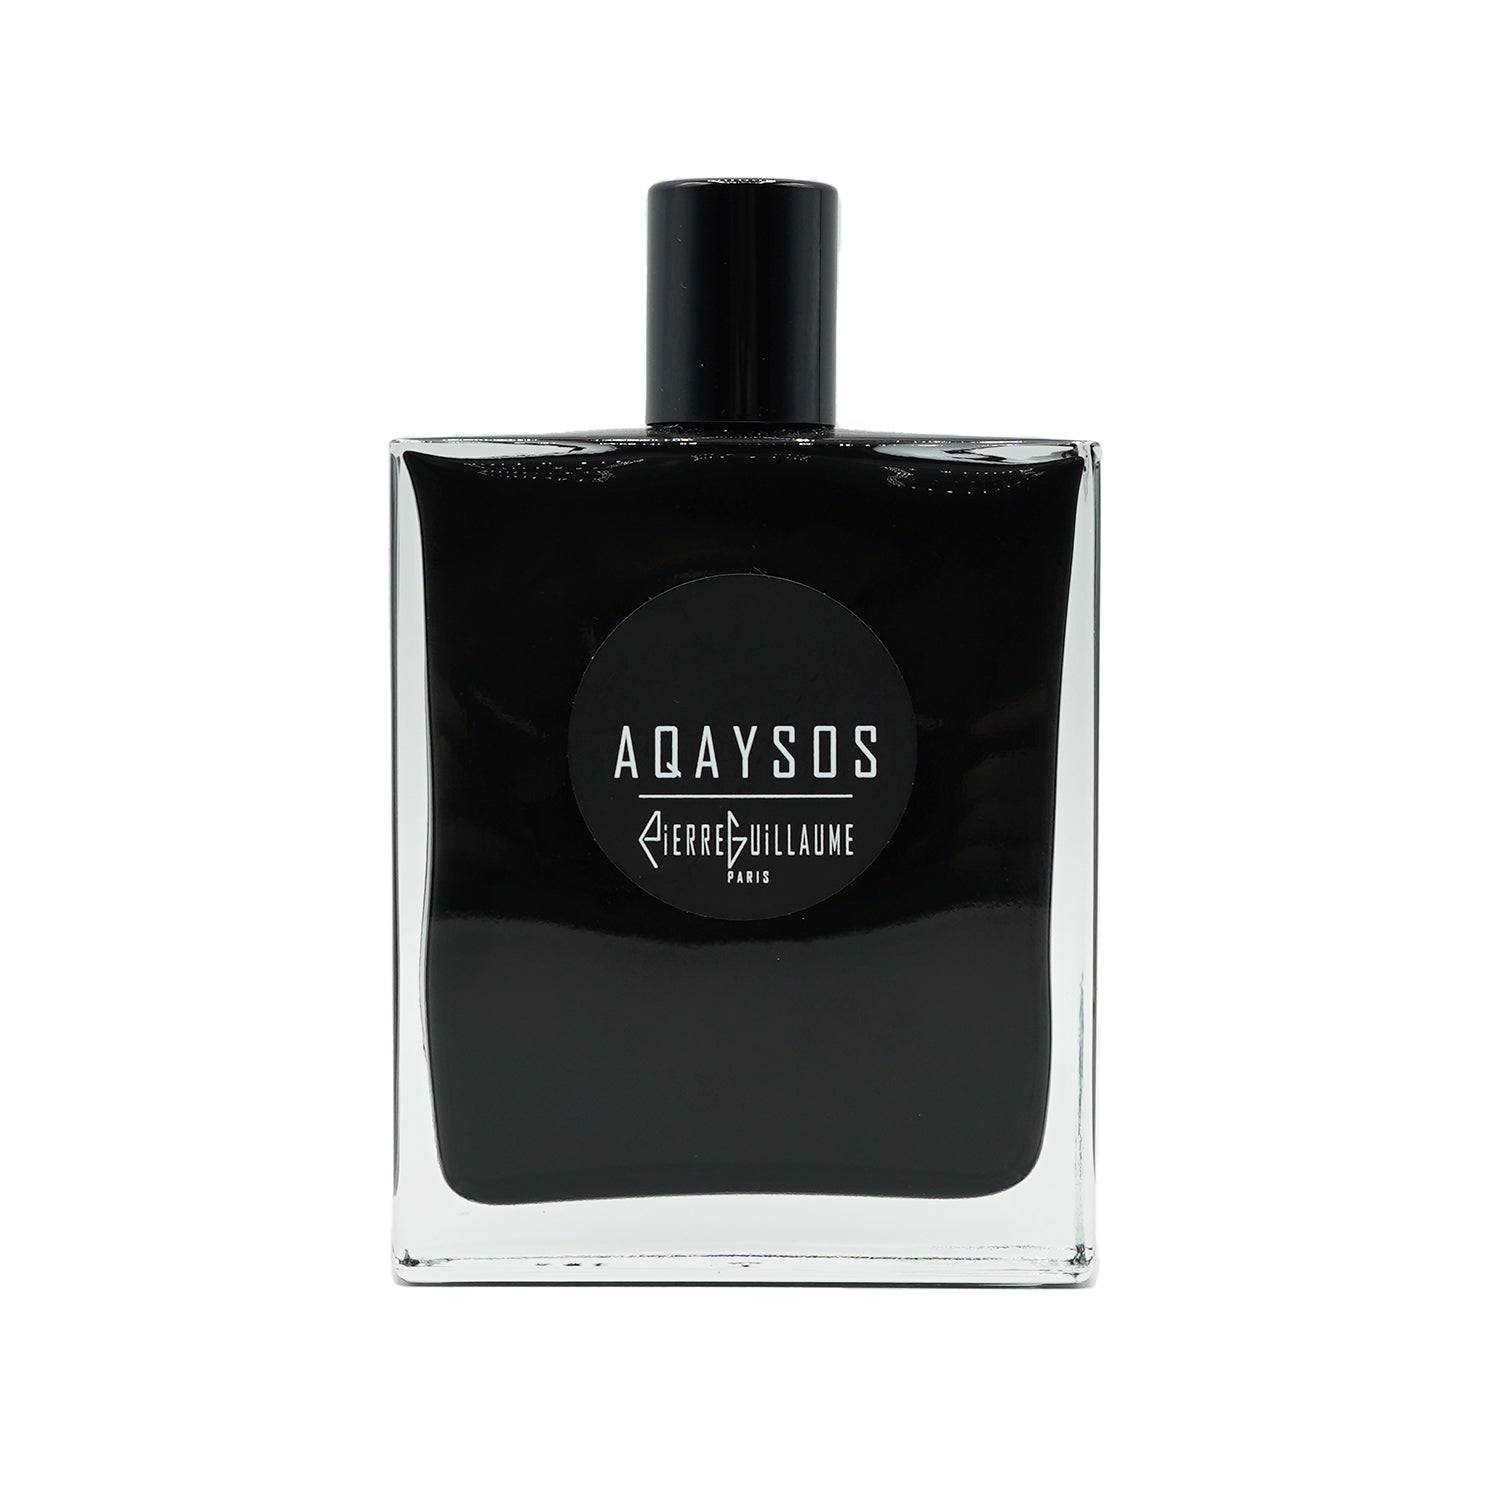 Pierre Guillaume | Aqaysos bottling 